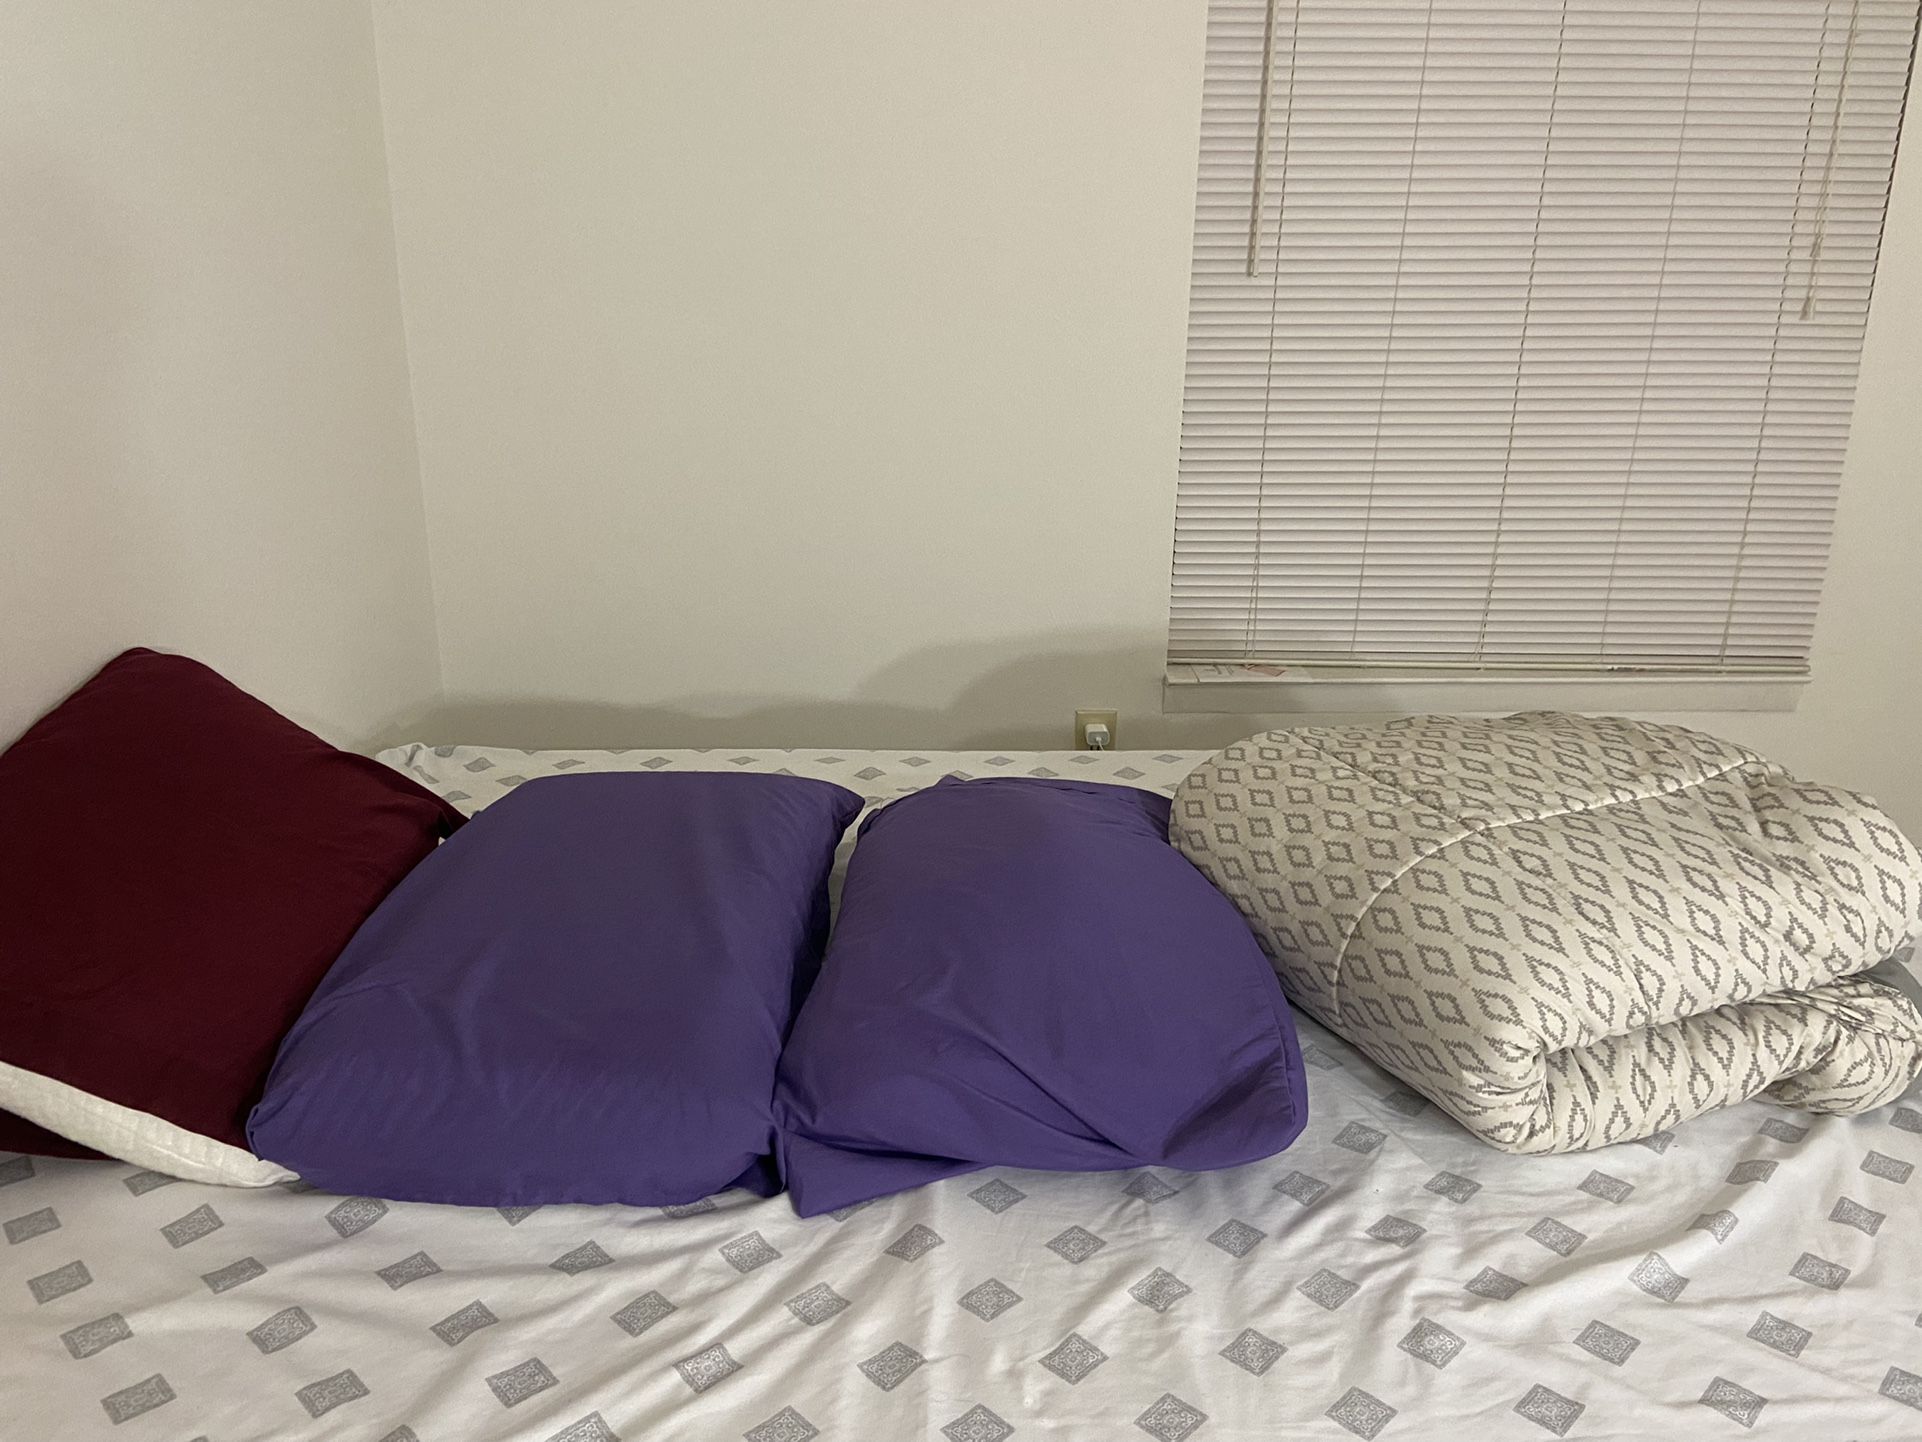 Pillows, Comforter